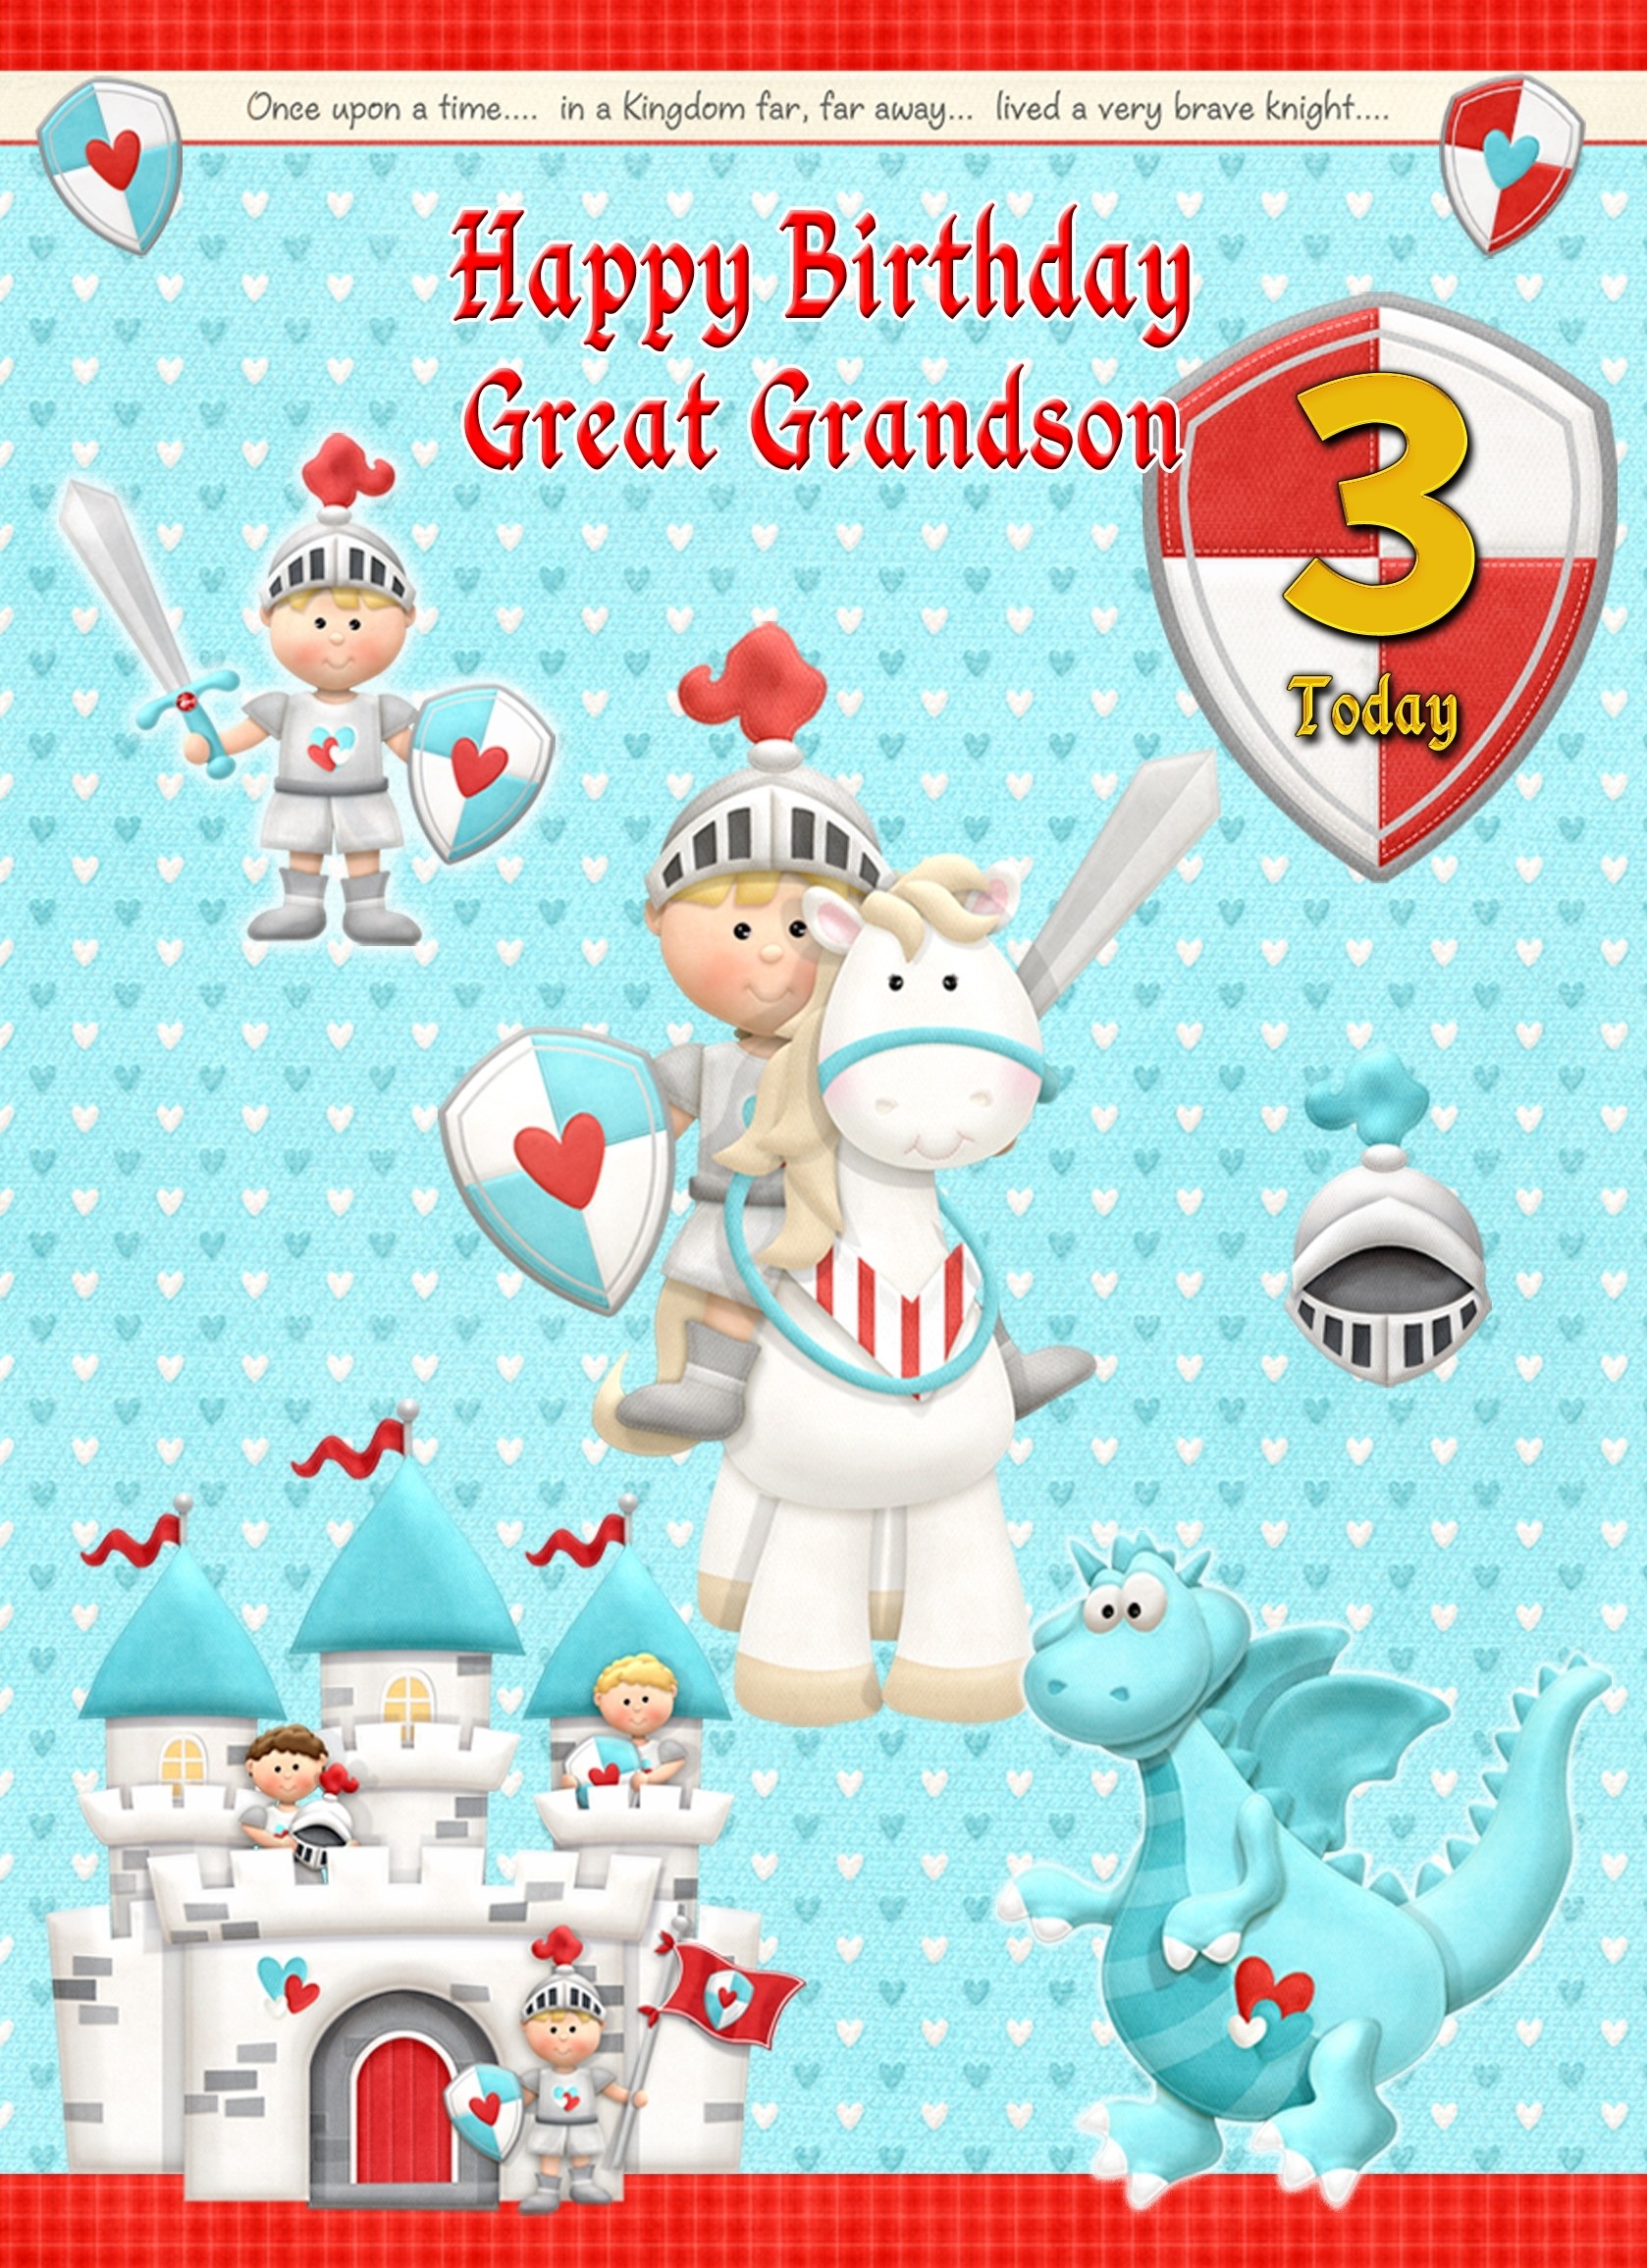 Kids 3rd Birthday Hero Knight Cartoon Card for Great Grandson